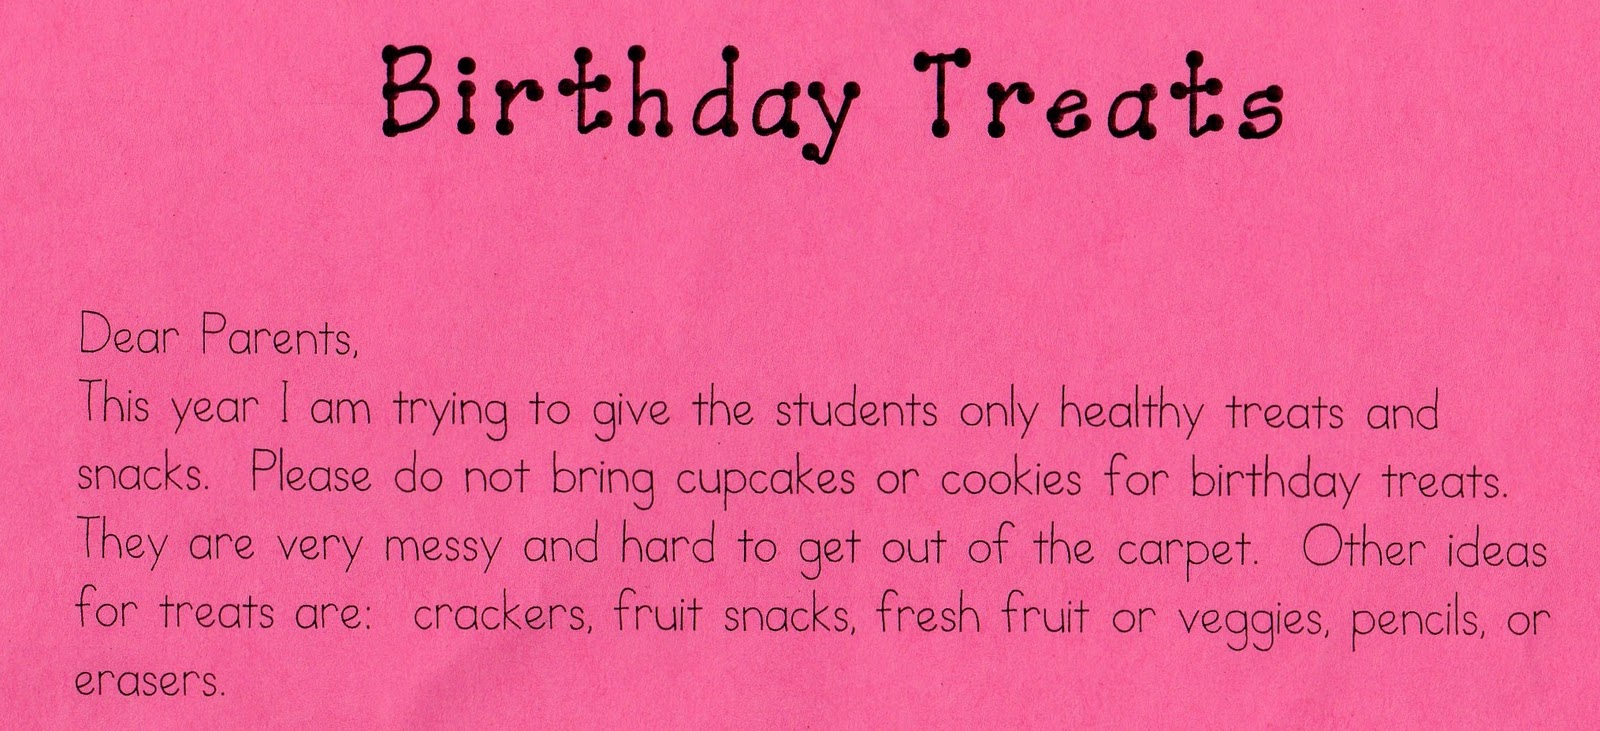 Healthy+snacks+for+school+birthdays